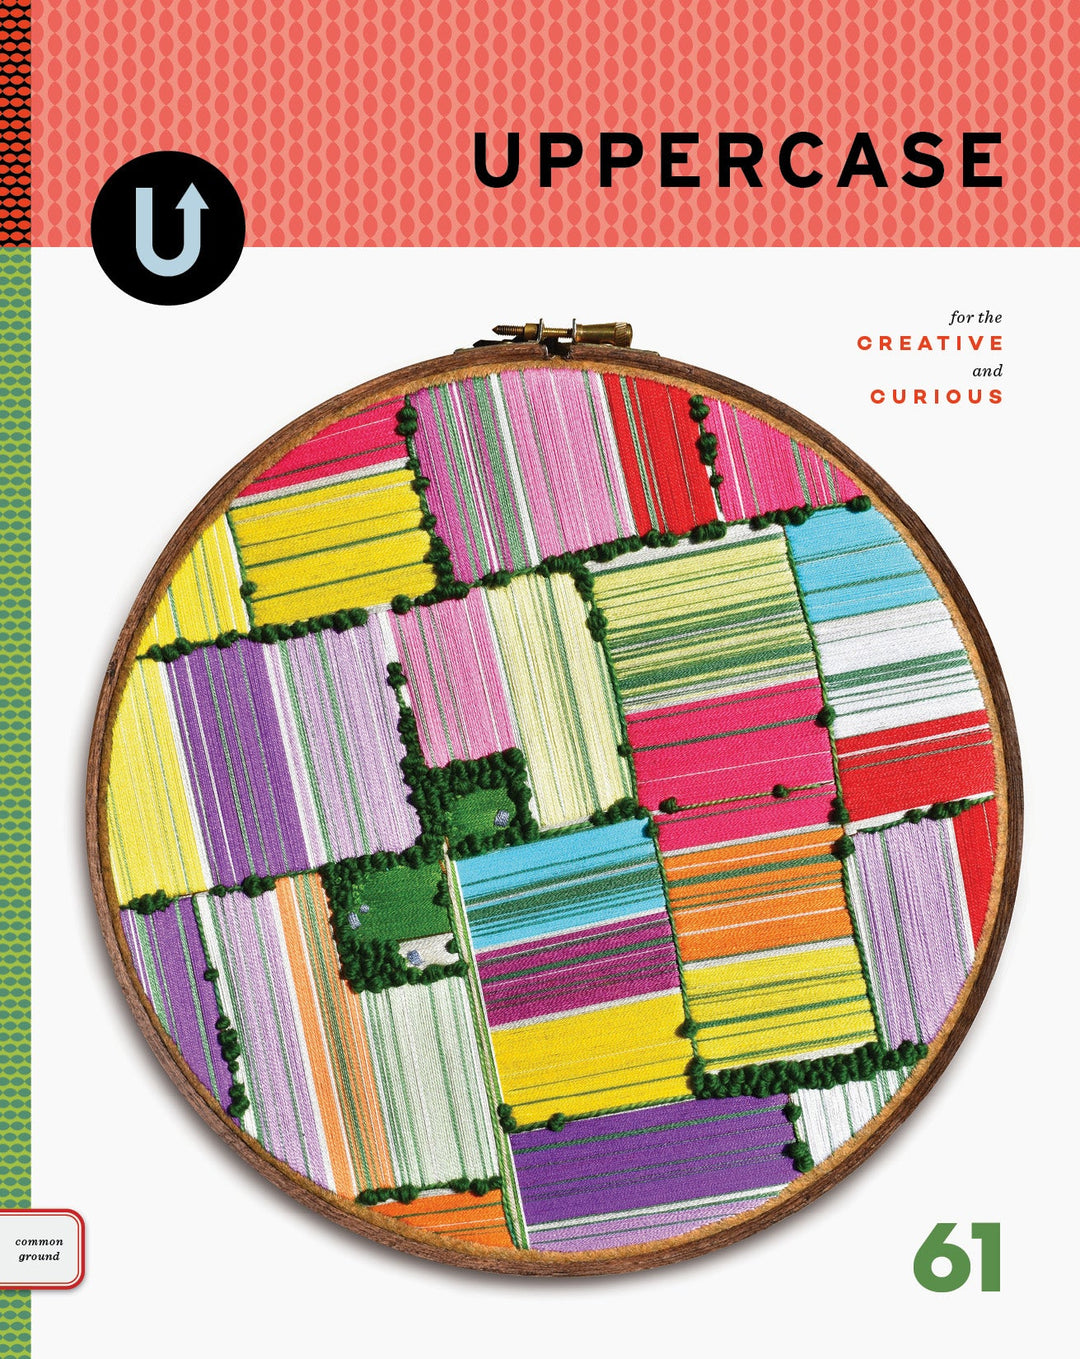 UPPERCASE magazine, Issue #61